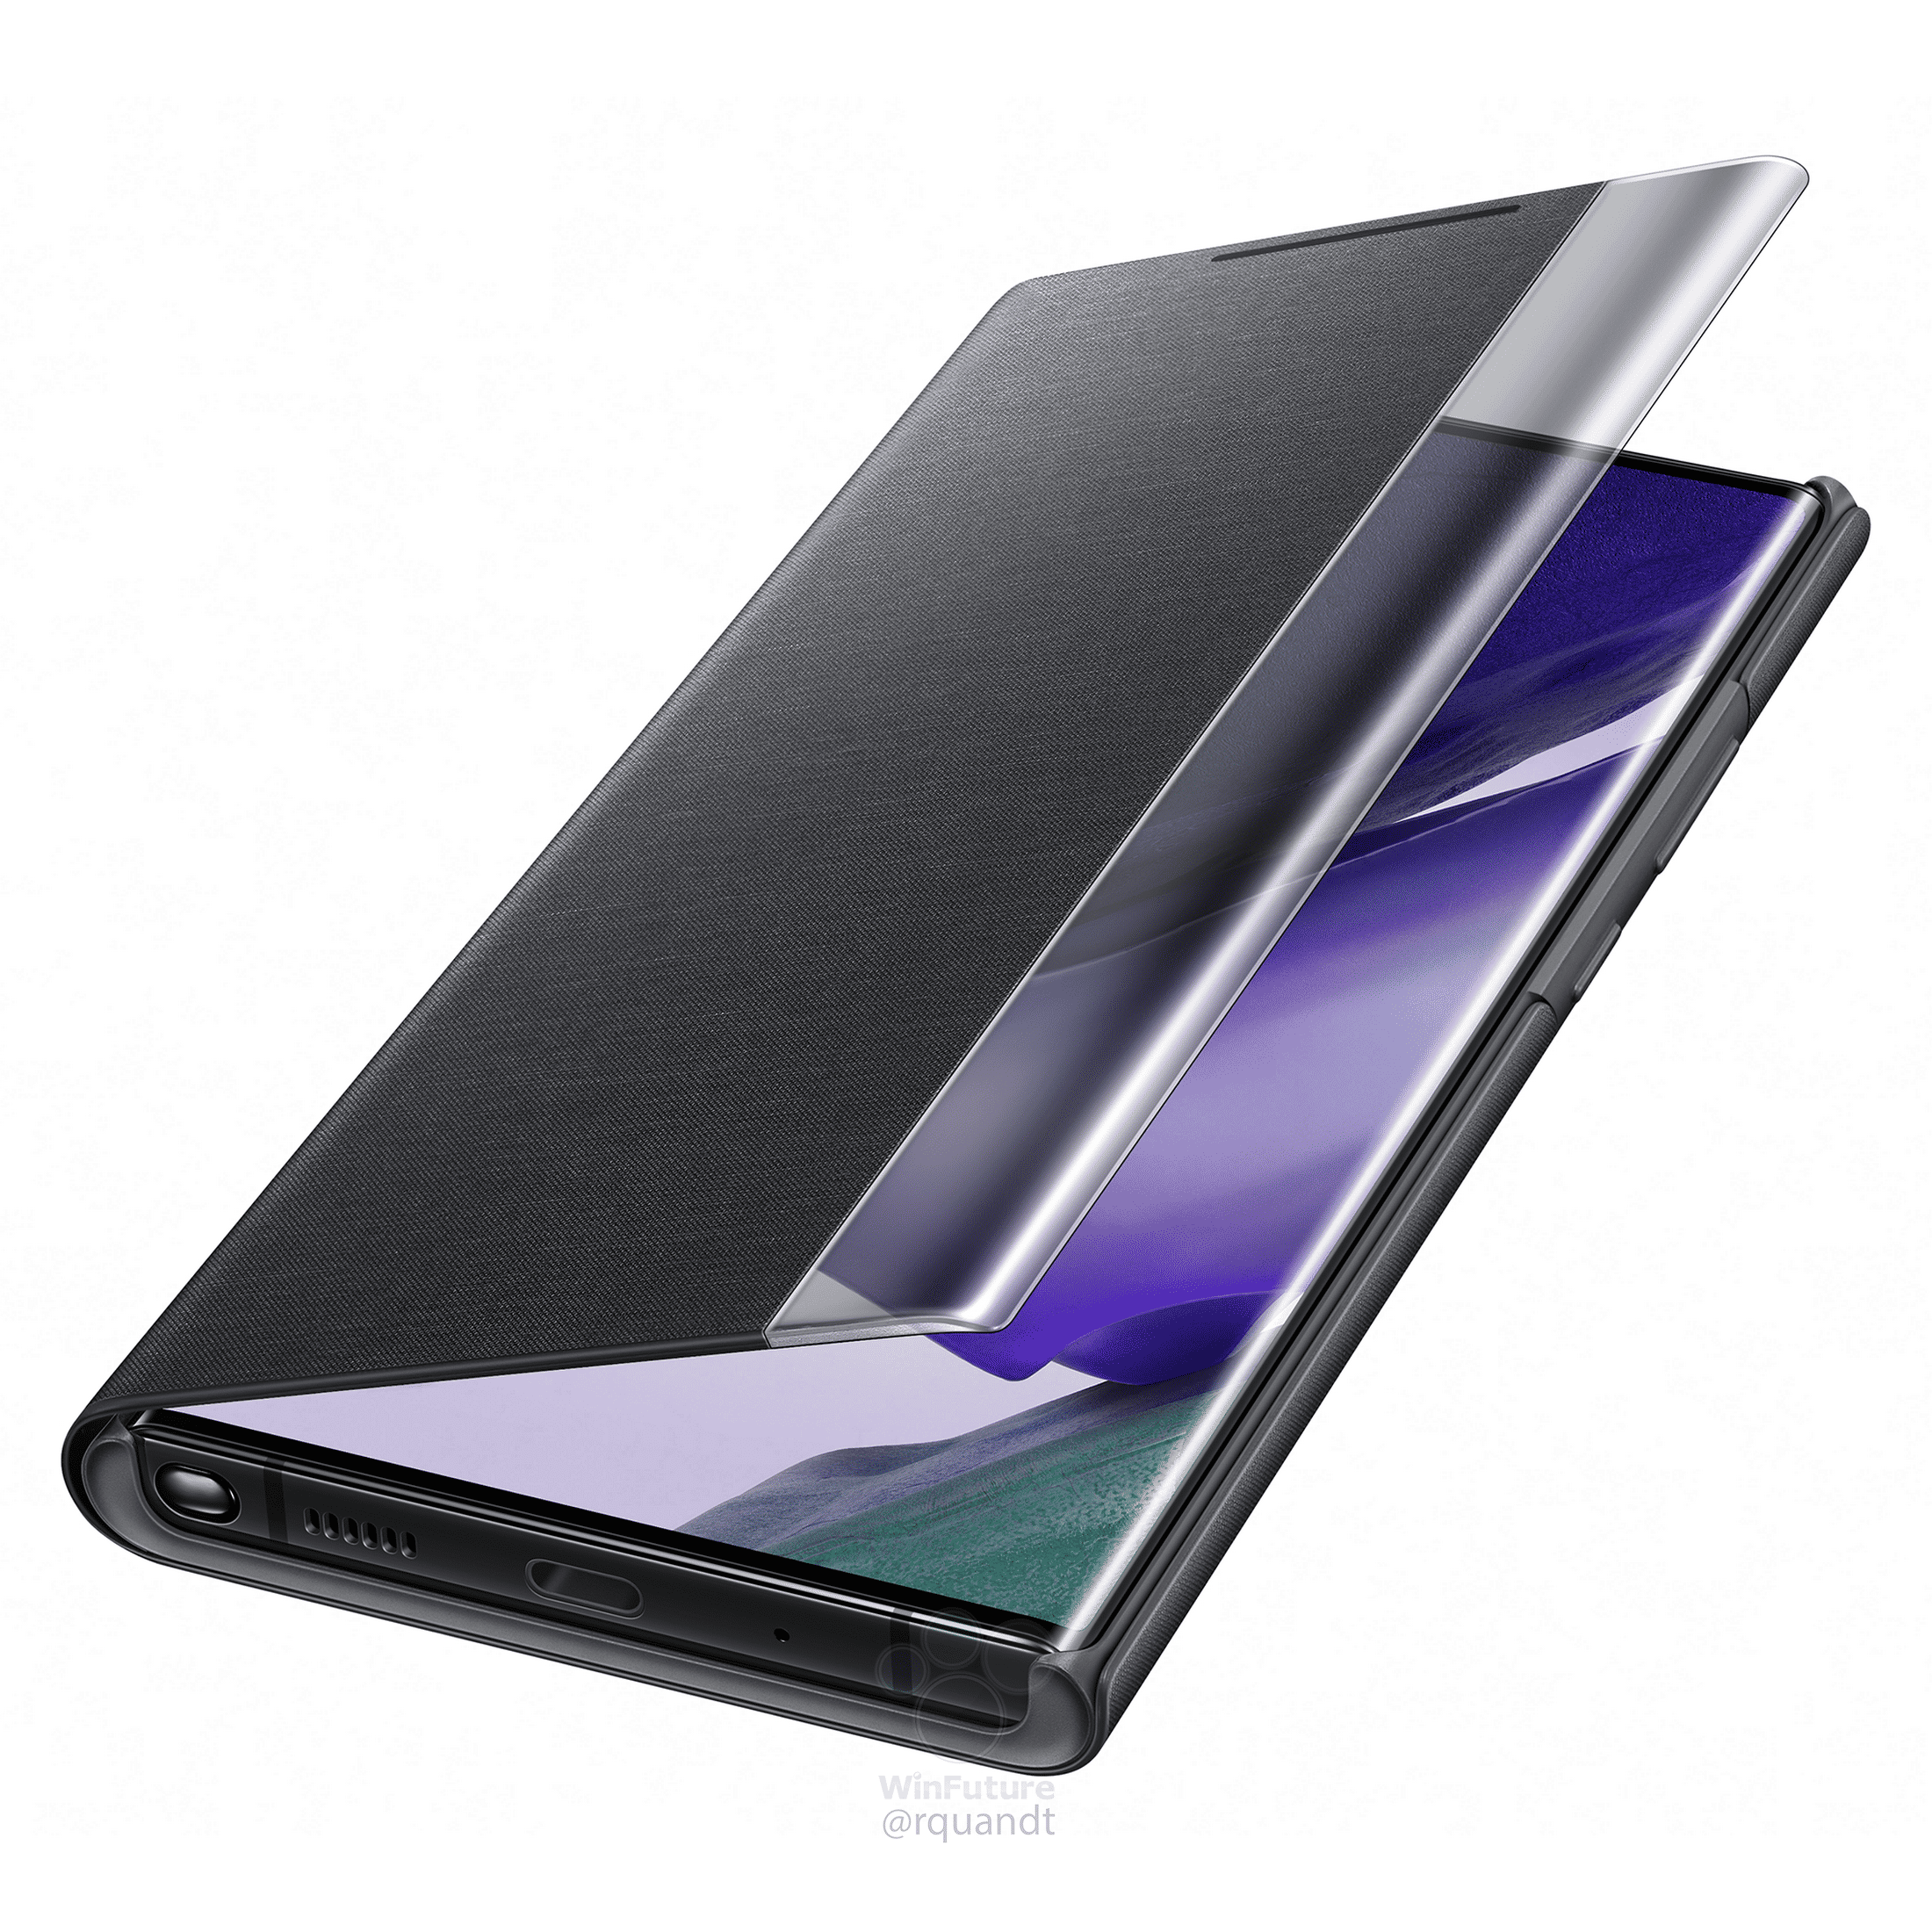 Samsung Galaxy Note 20 cases (official) - MSPoweruser